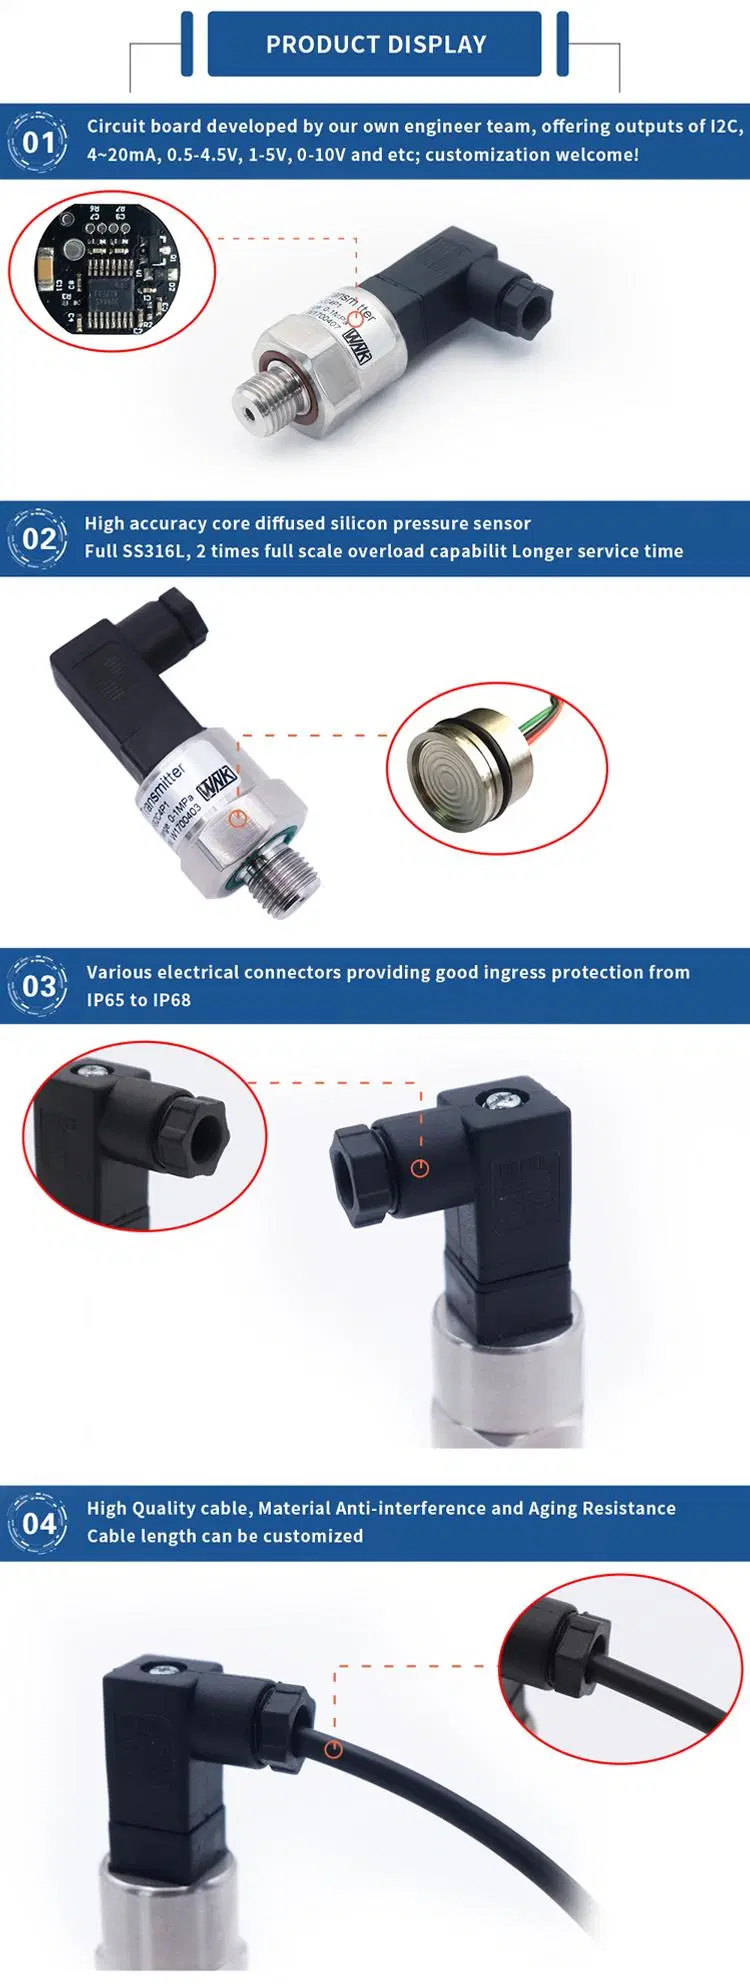 4-20mA Silicon Water Pressure Sensor for Air Compressor/ HAVC / Automation